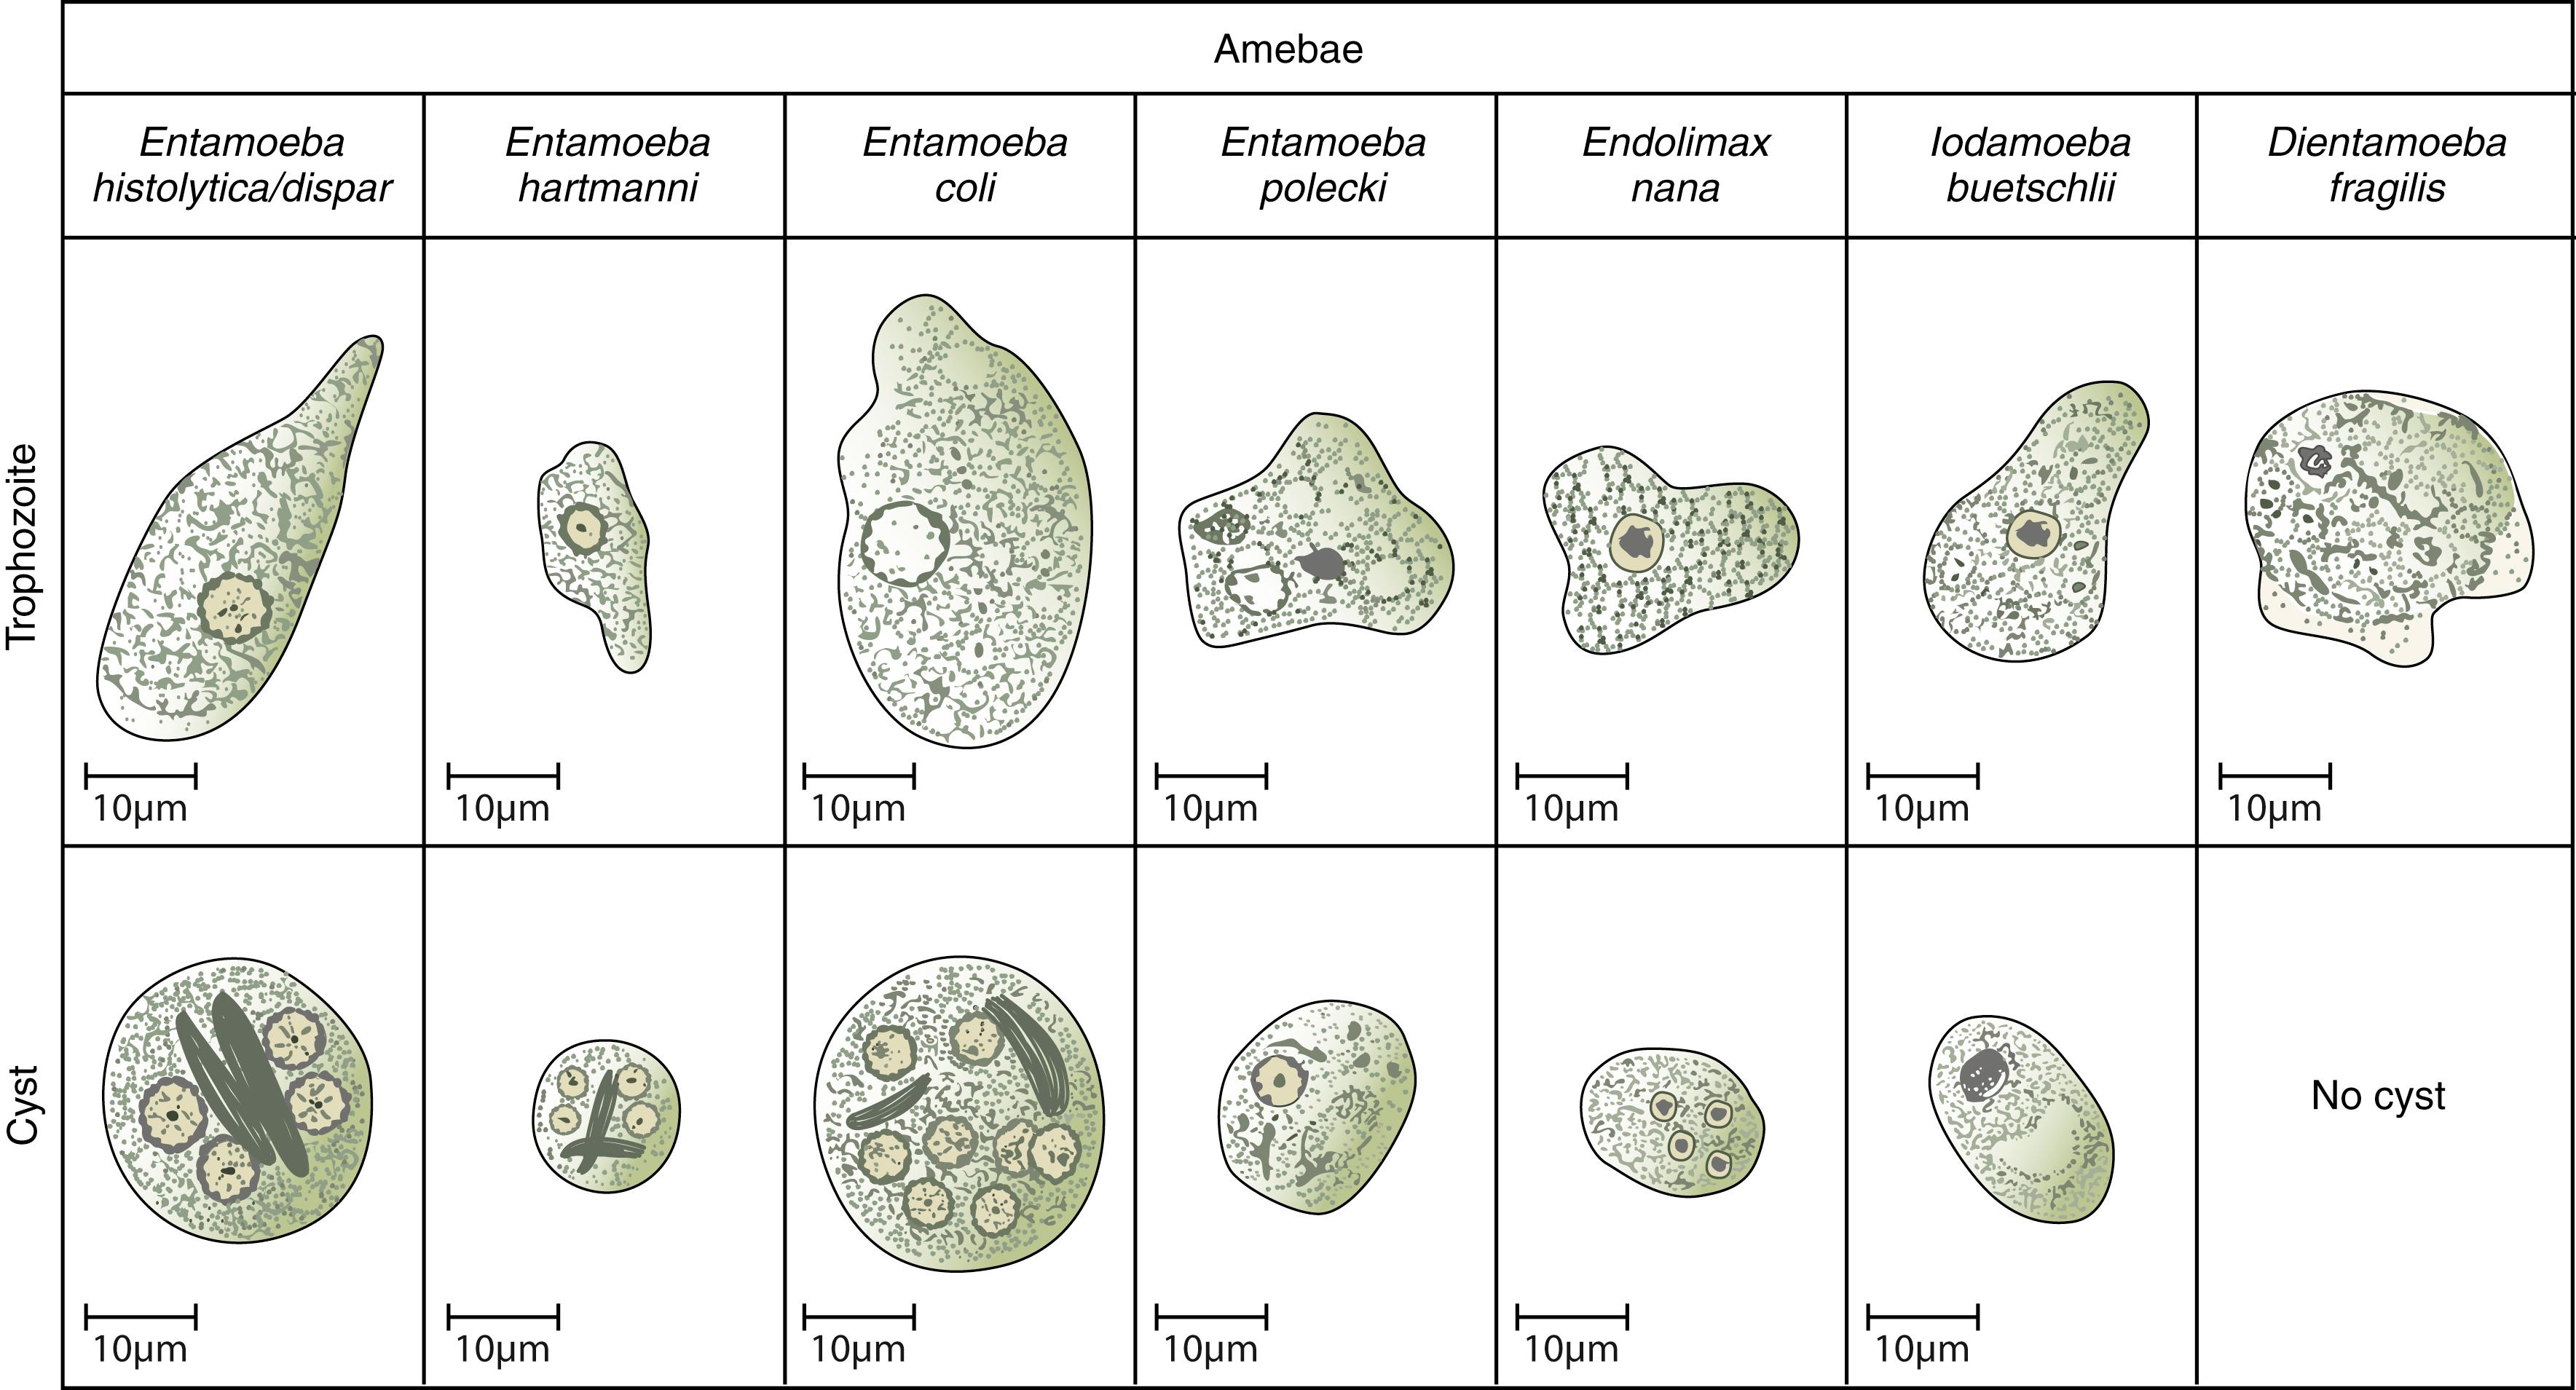 Figure 65.9, Amebae found in human stool specimens. ( Dientamoeba fragilis is a flagellate but morphologically similar to amebae.)